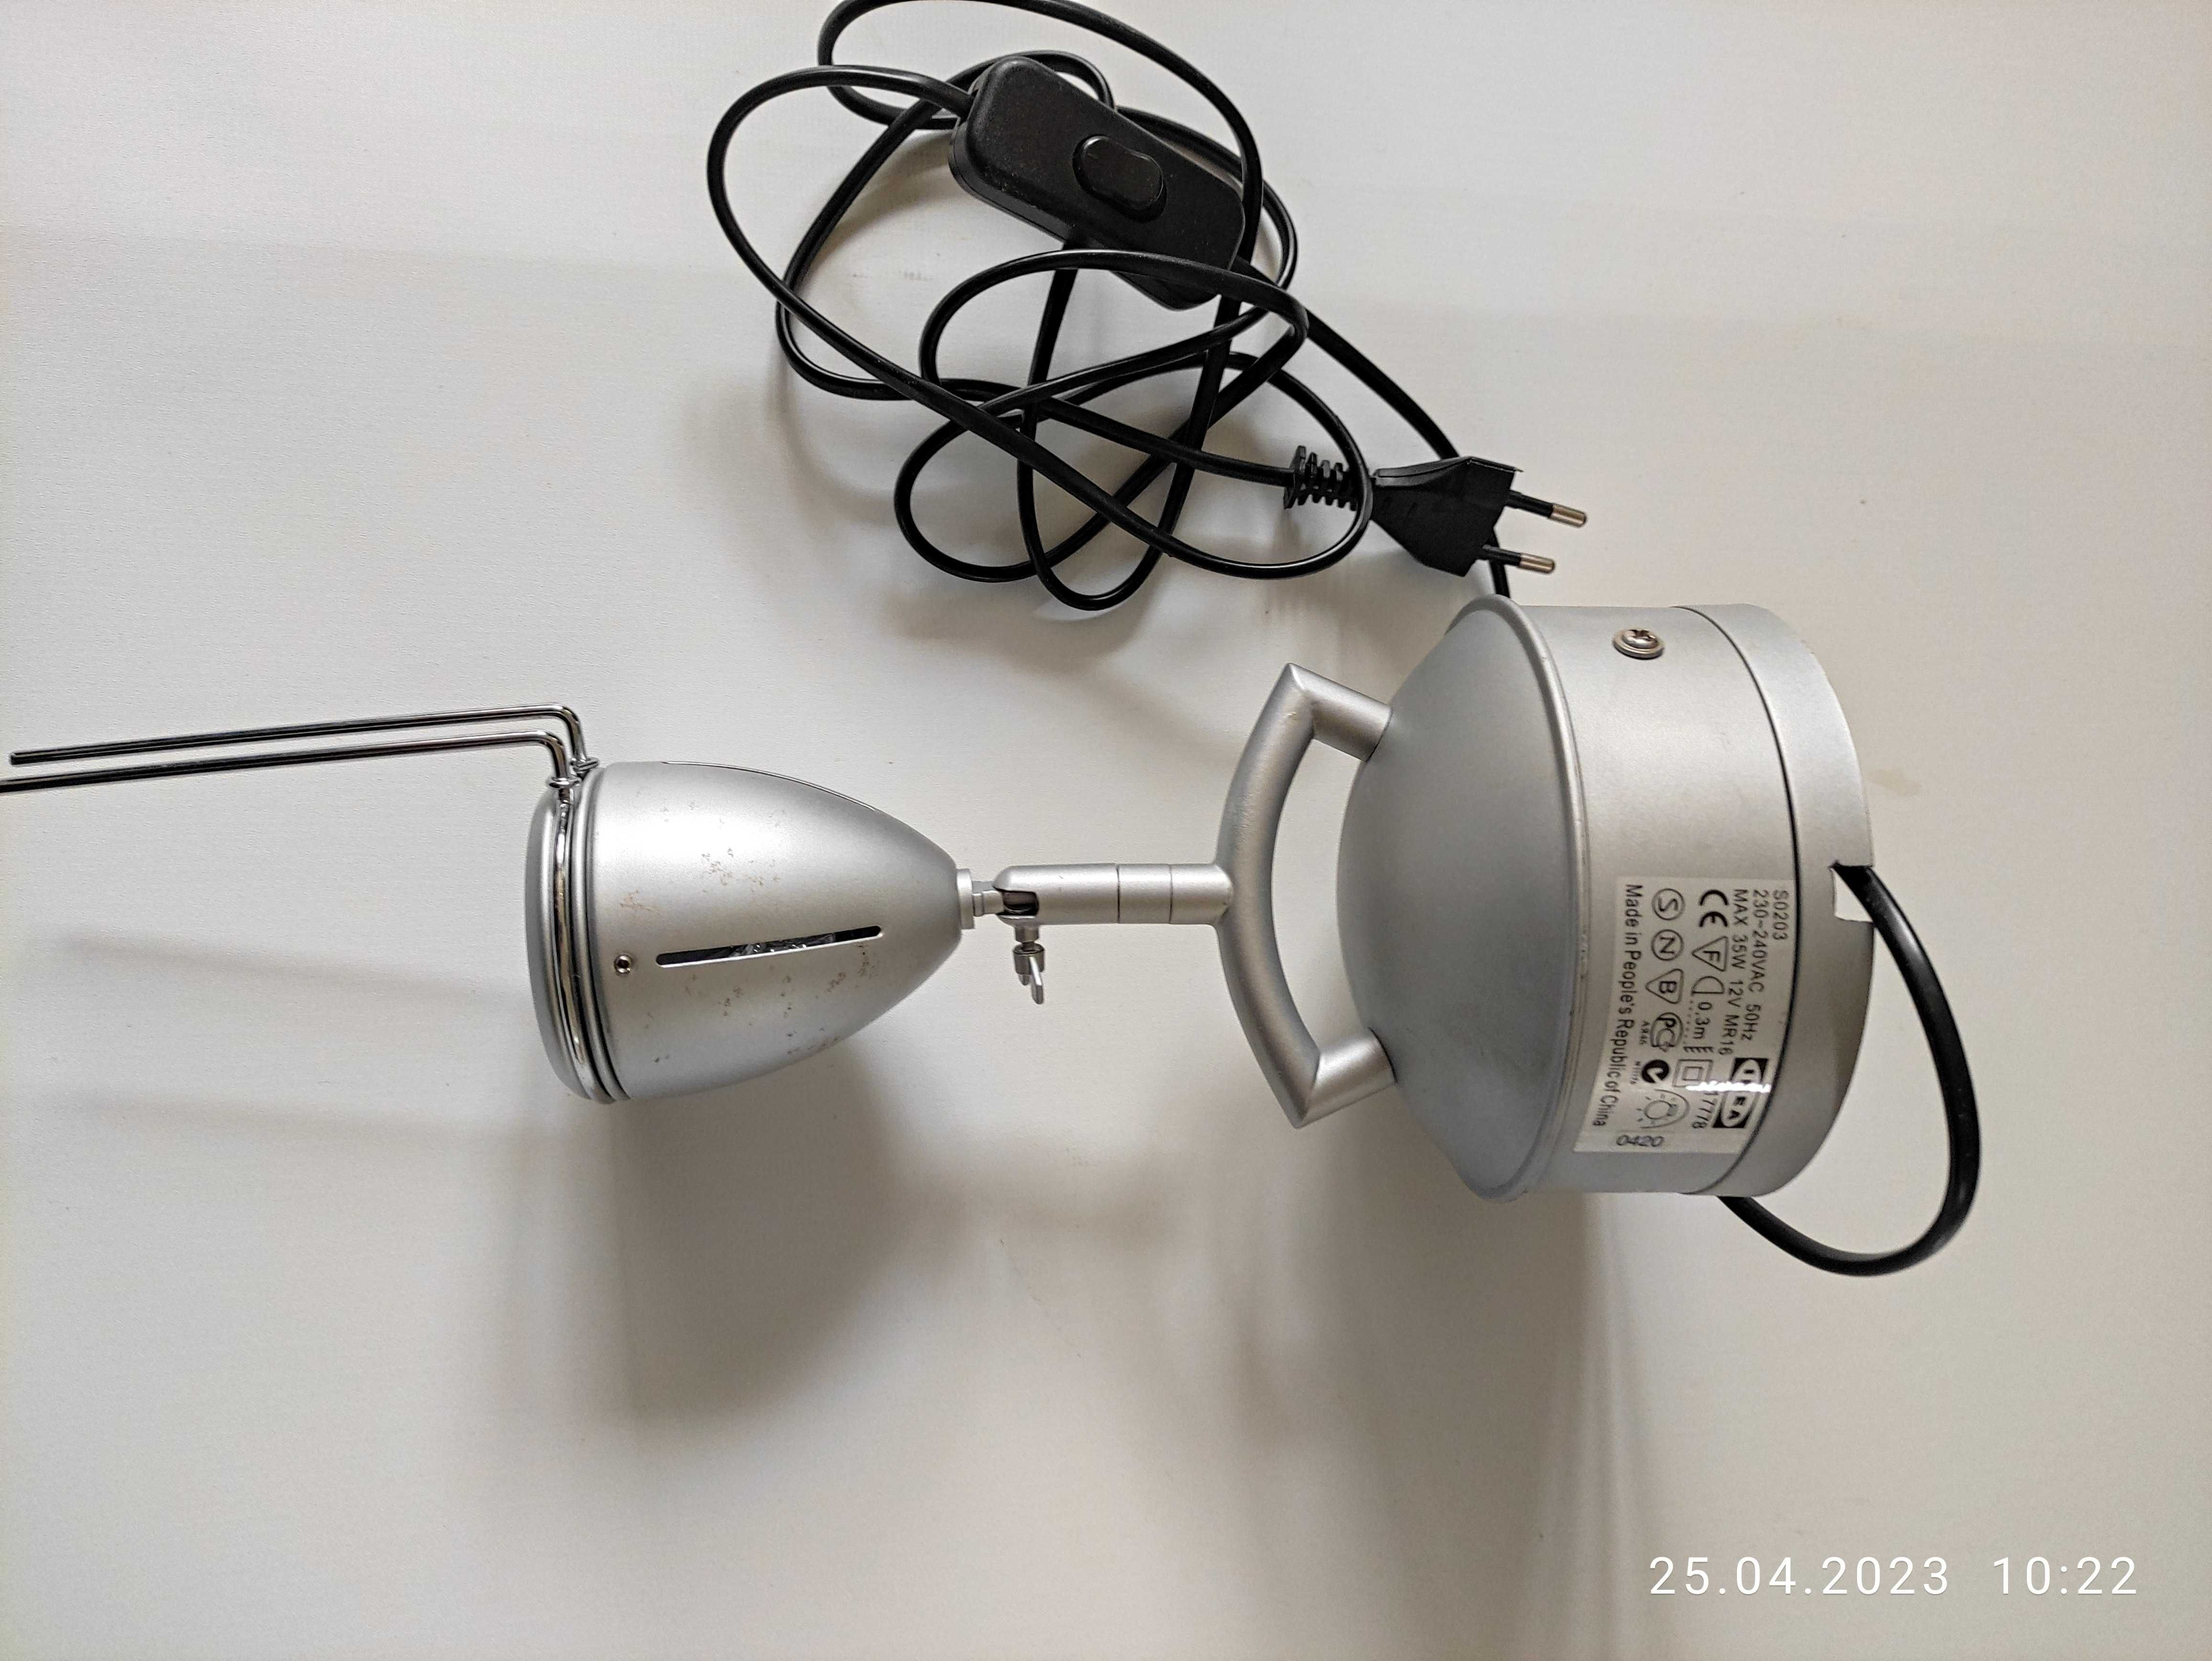 lampka projektor , rzutnik Korelin Ikea